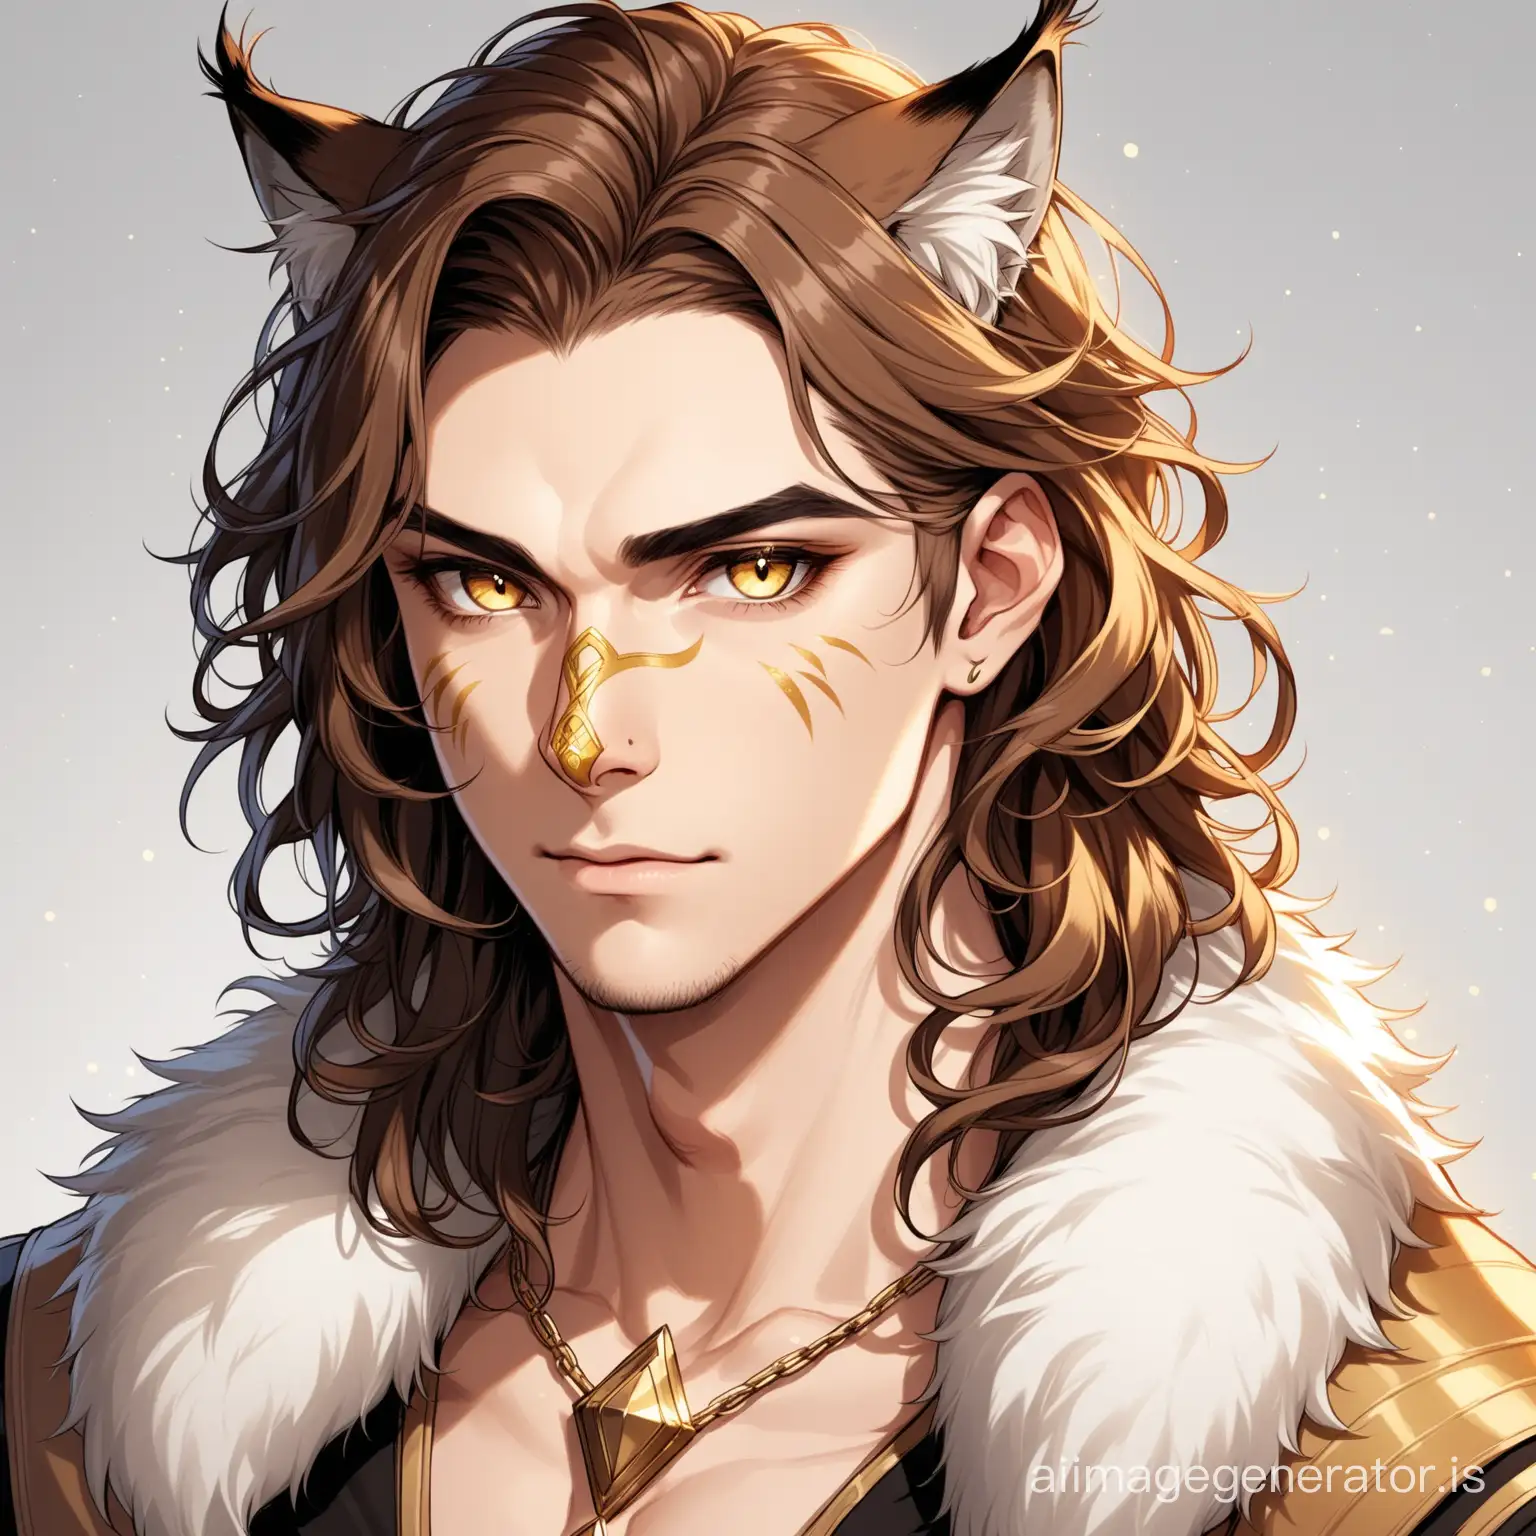 Lynx demihuman, man, beautiful, brown hair, curls, striking gold eyes, butten nose.